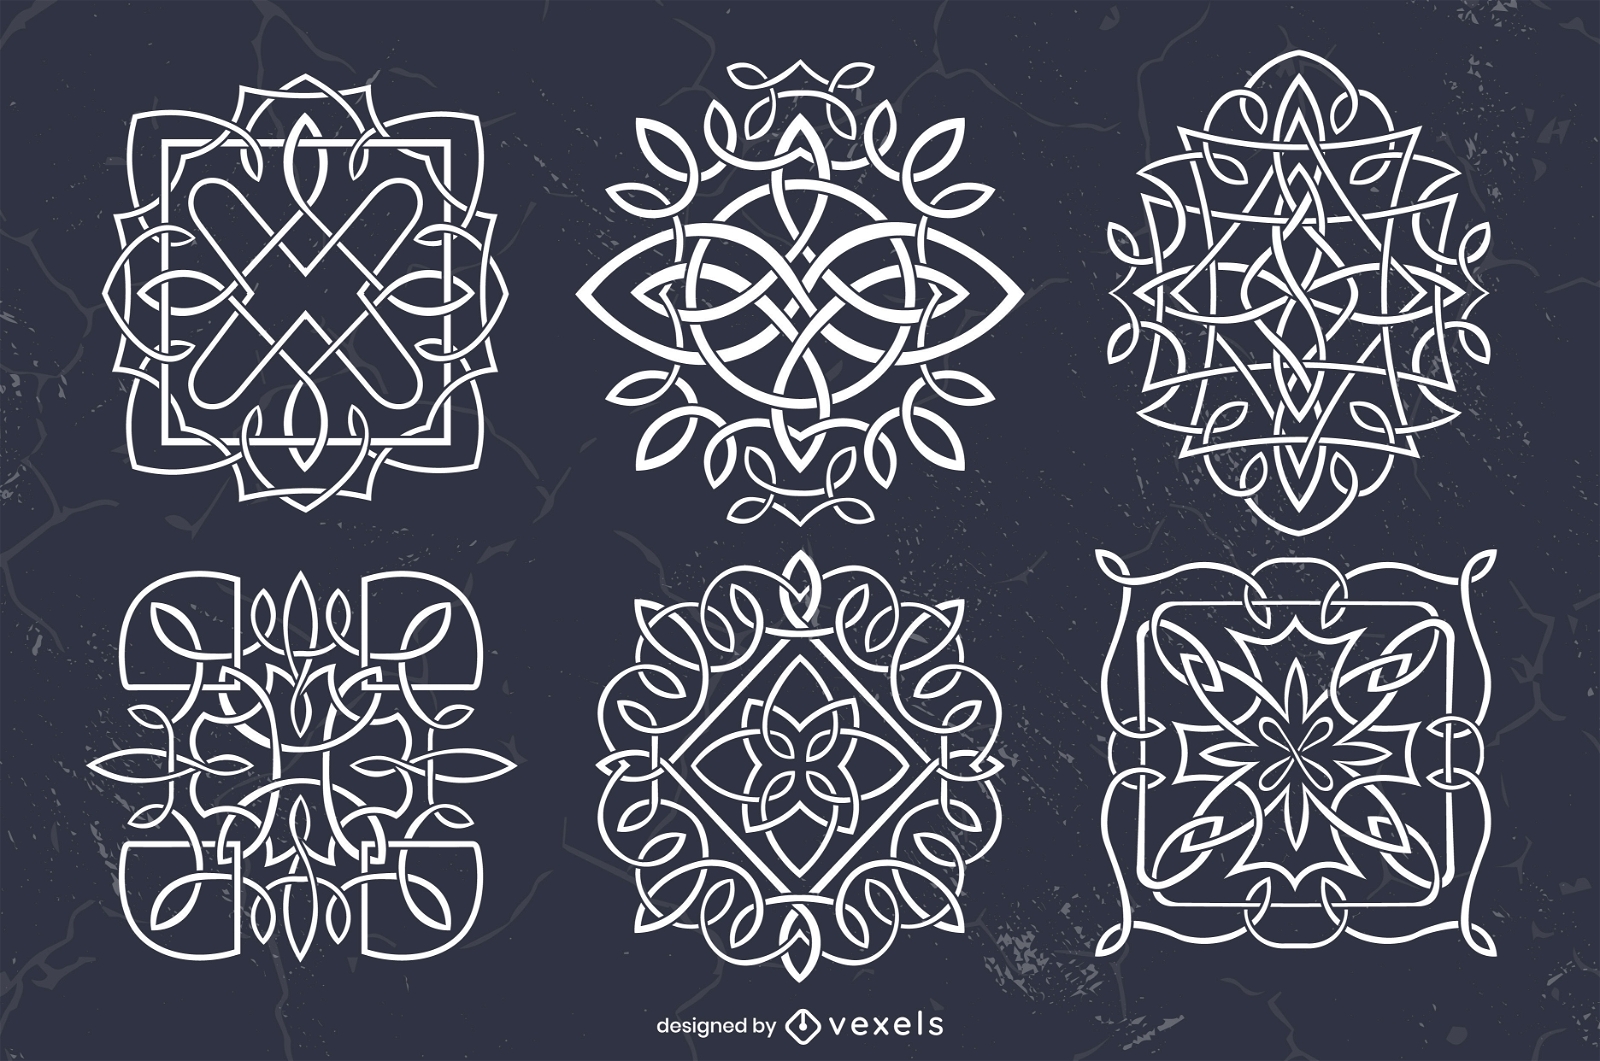 Celtic knot ancient symbol designs set